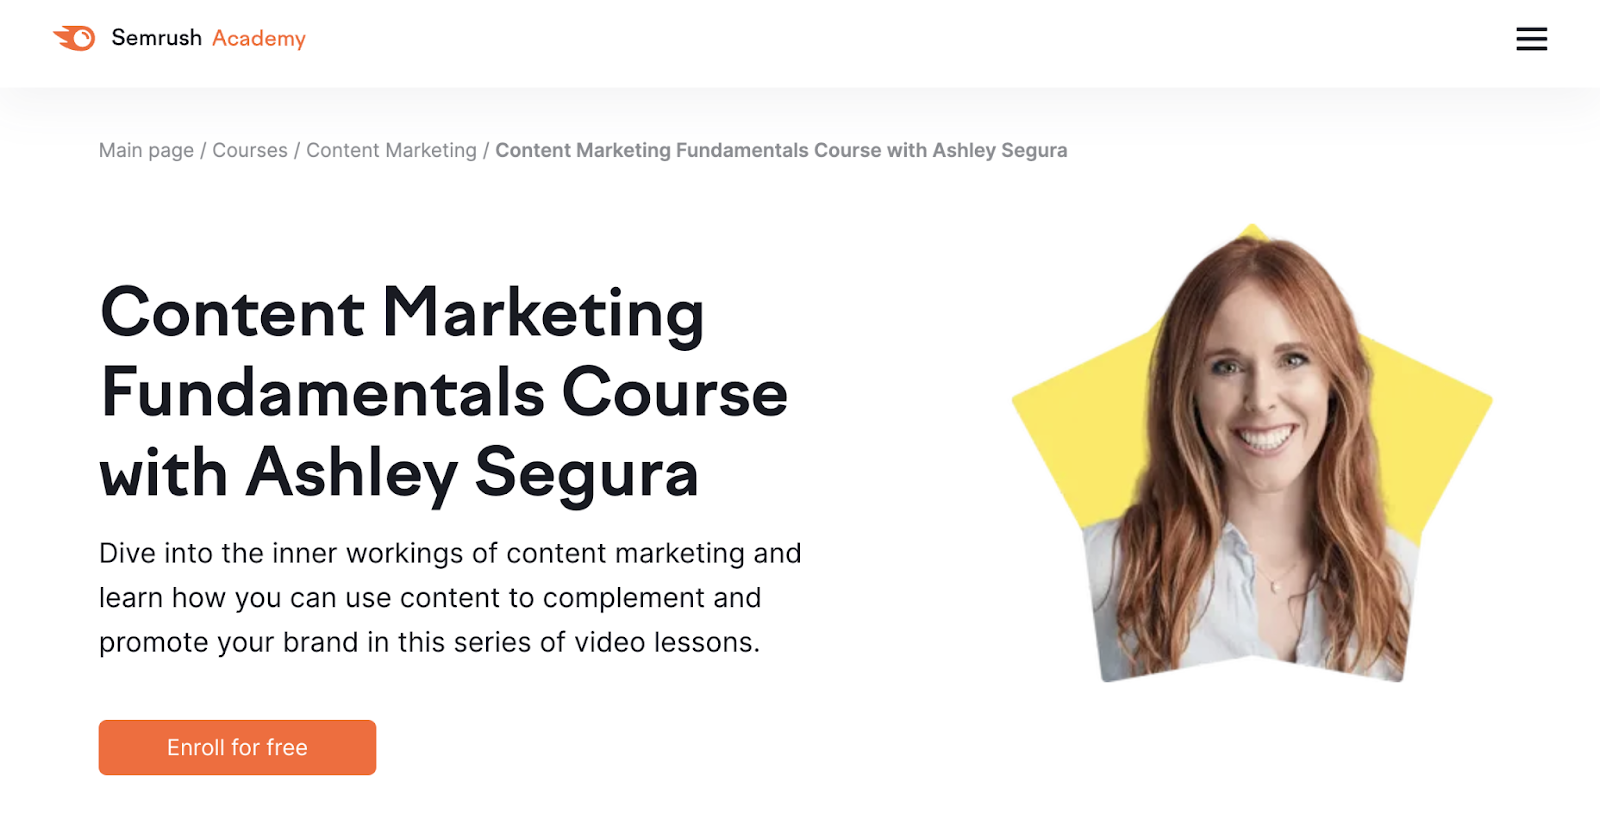 Content Marketing Fundamentals Course with Ashley Segura